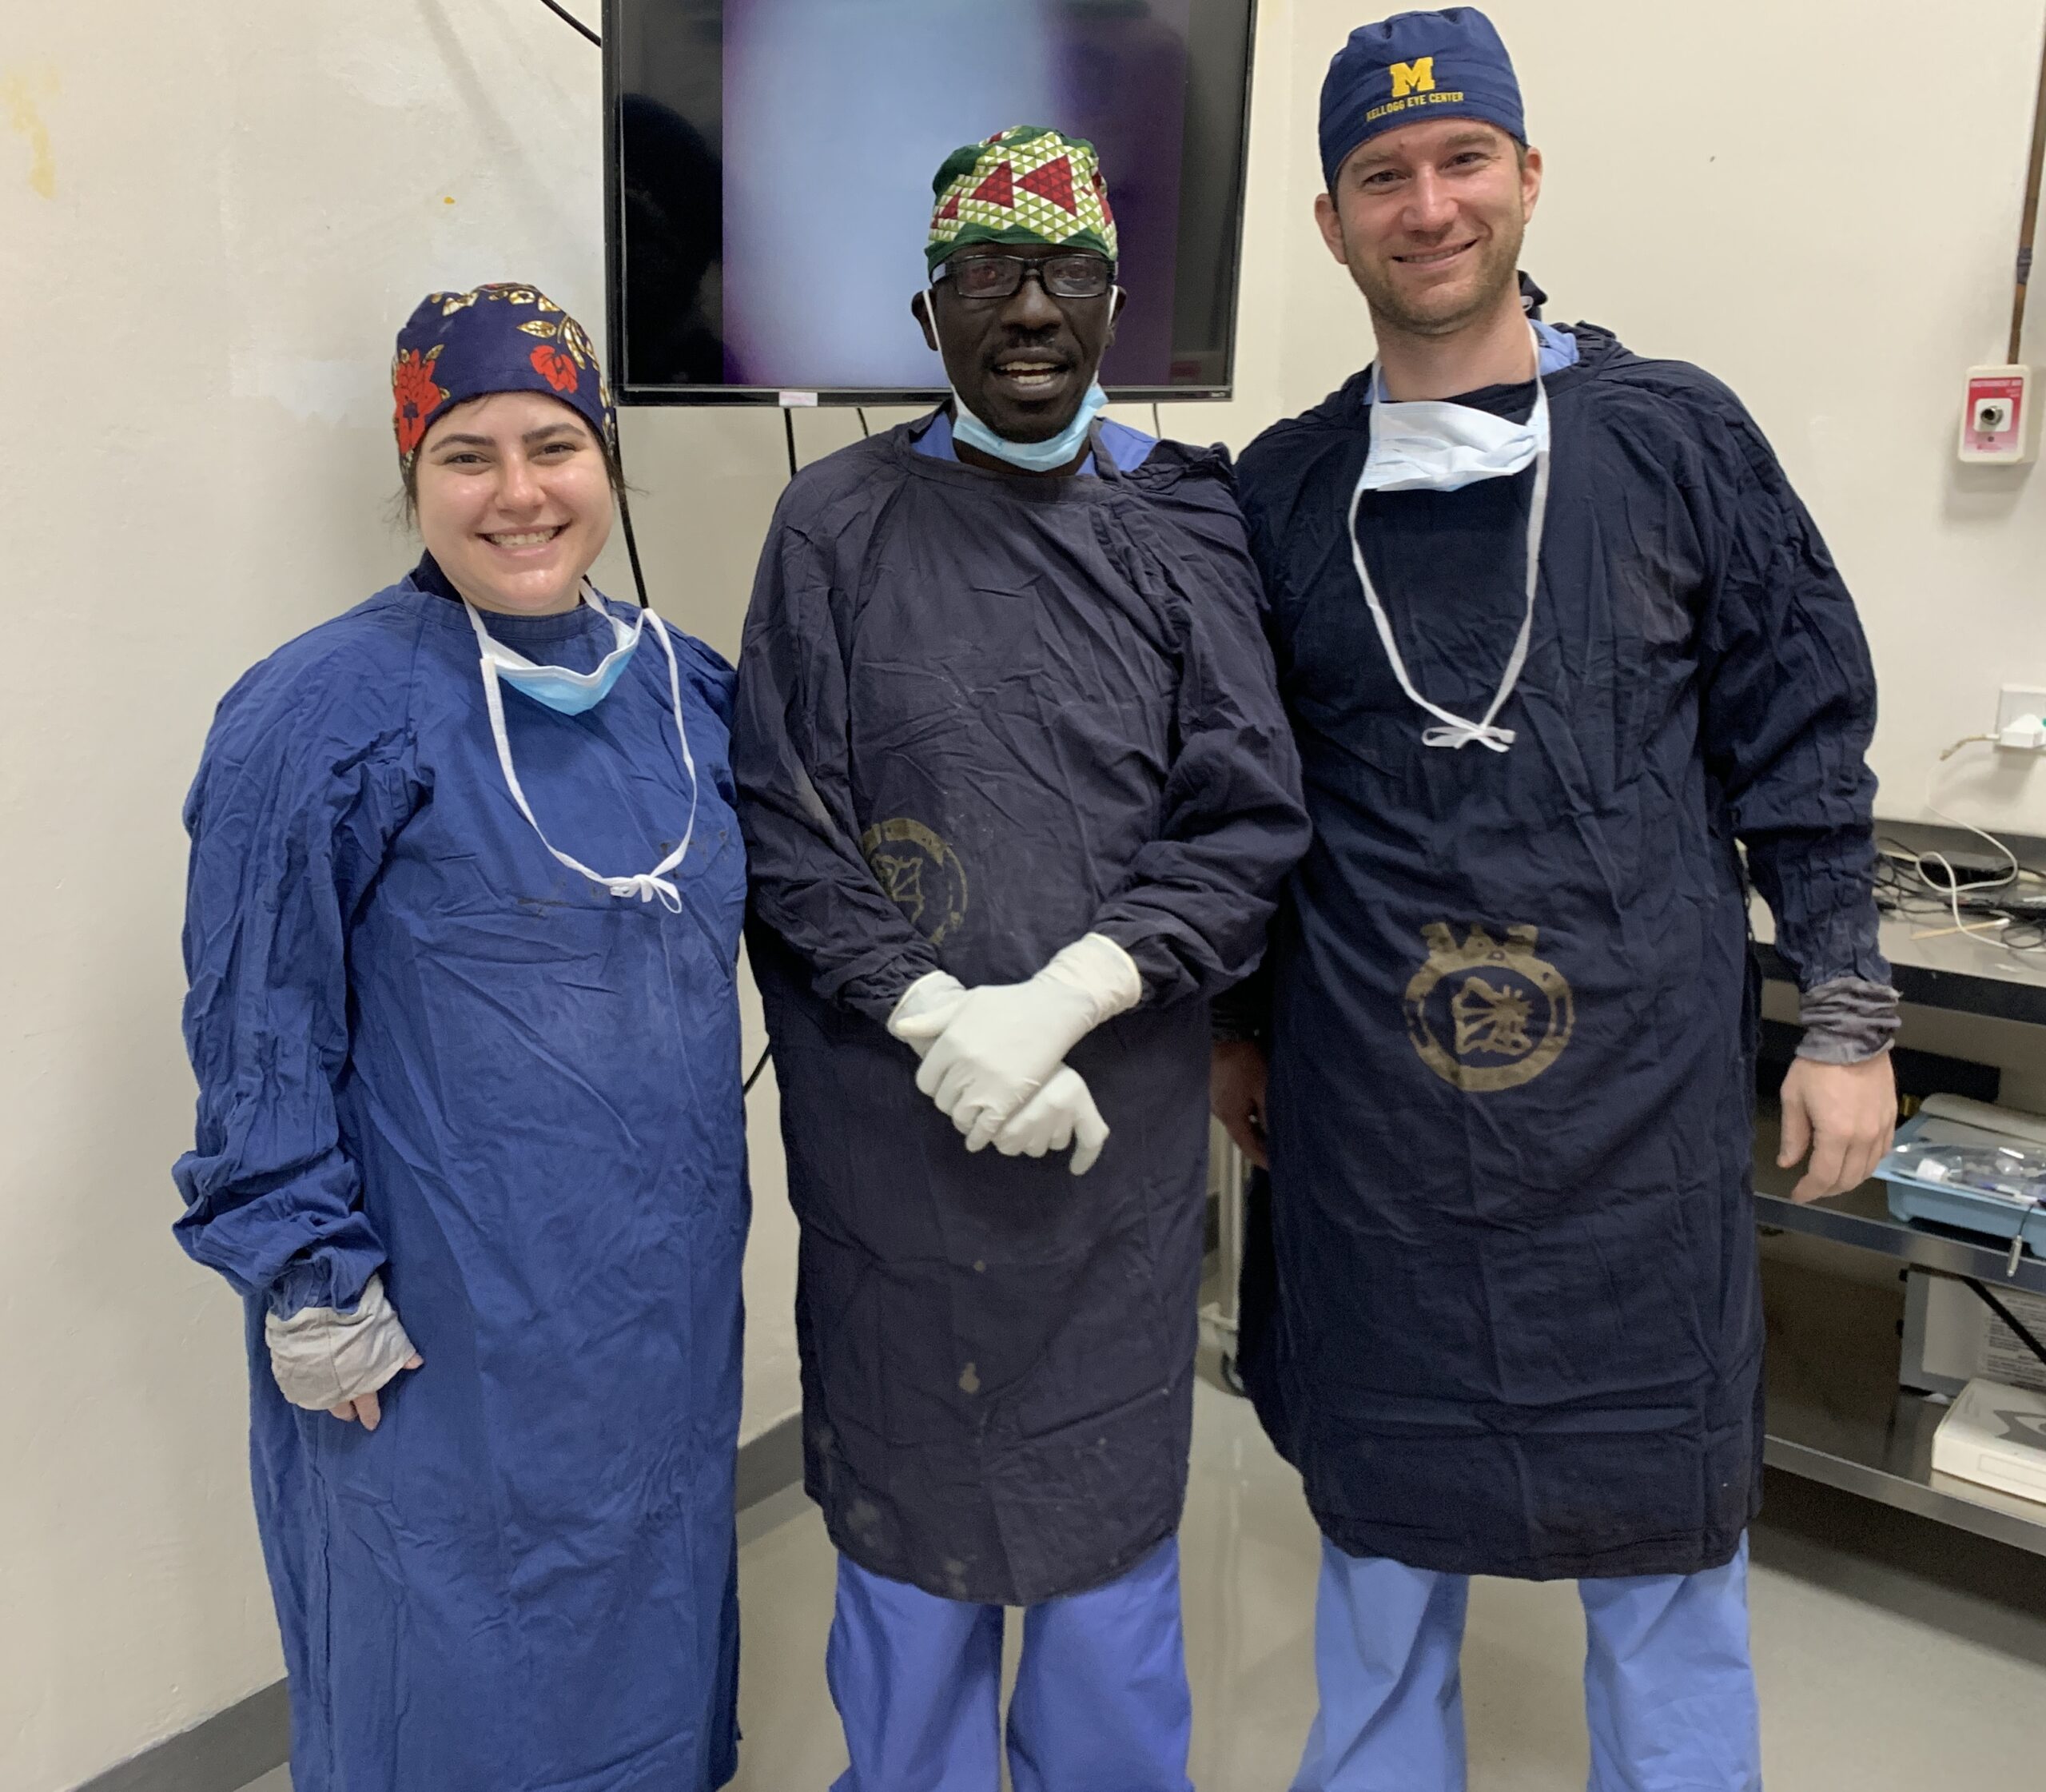 Sara Krachmalnick, Senior Ophthalmology Resident at KU, Dr. Ben Roberts, Ophthalmology Specialist at Tenwek Hospital in Kenya, and Dr. Miles Greenwald, Ophthalmology Specialist